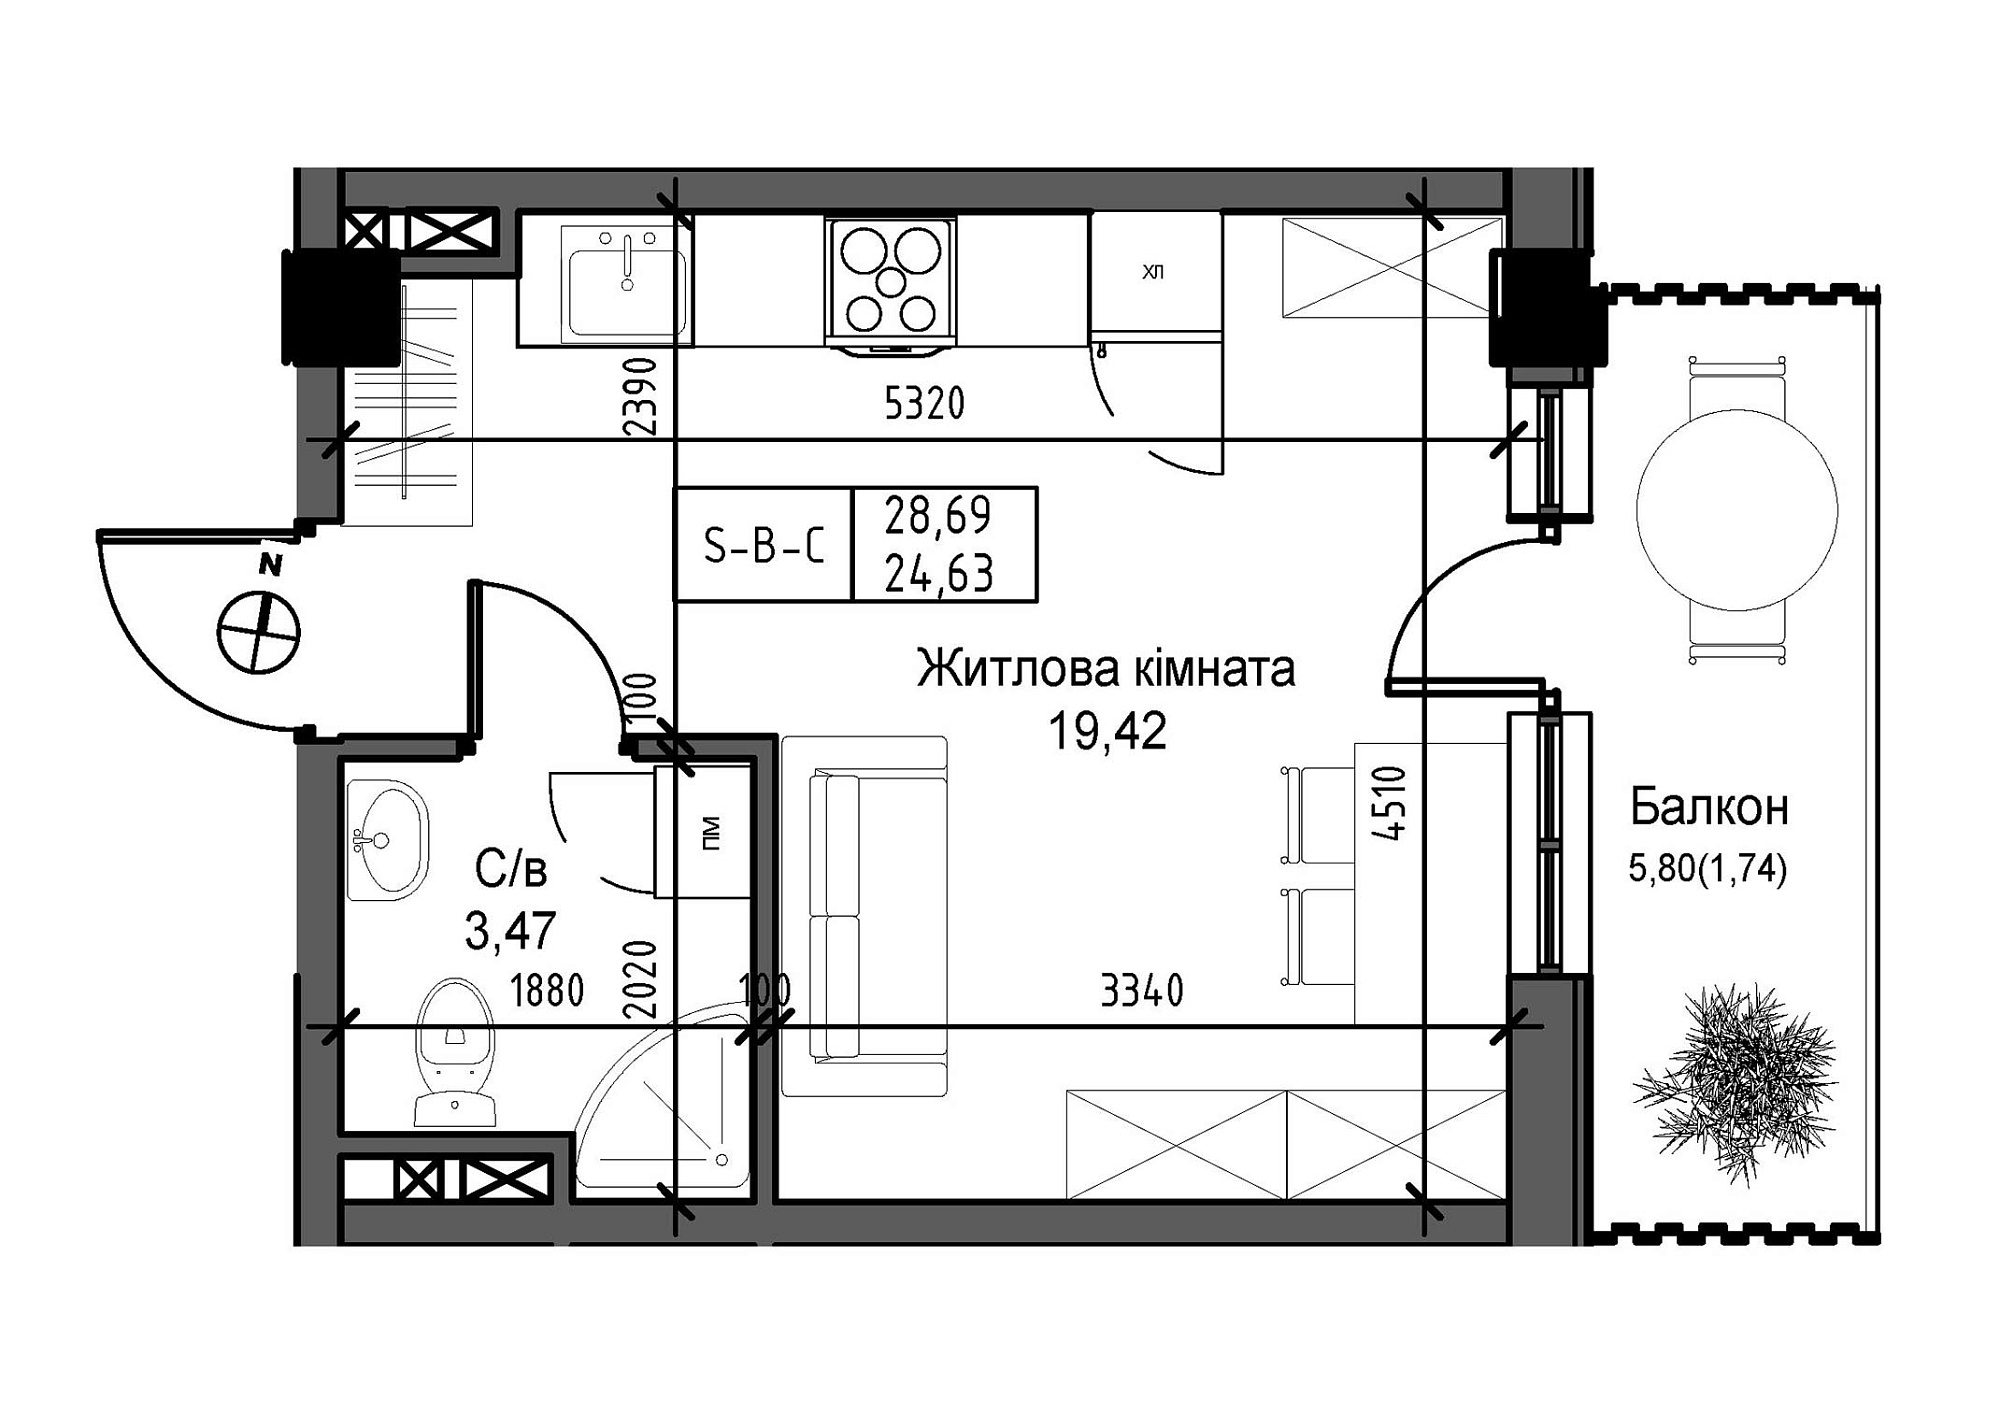 Planning Smart flats area 24.63m2, UM-007-03/0005.